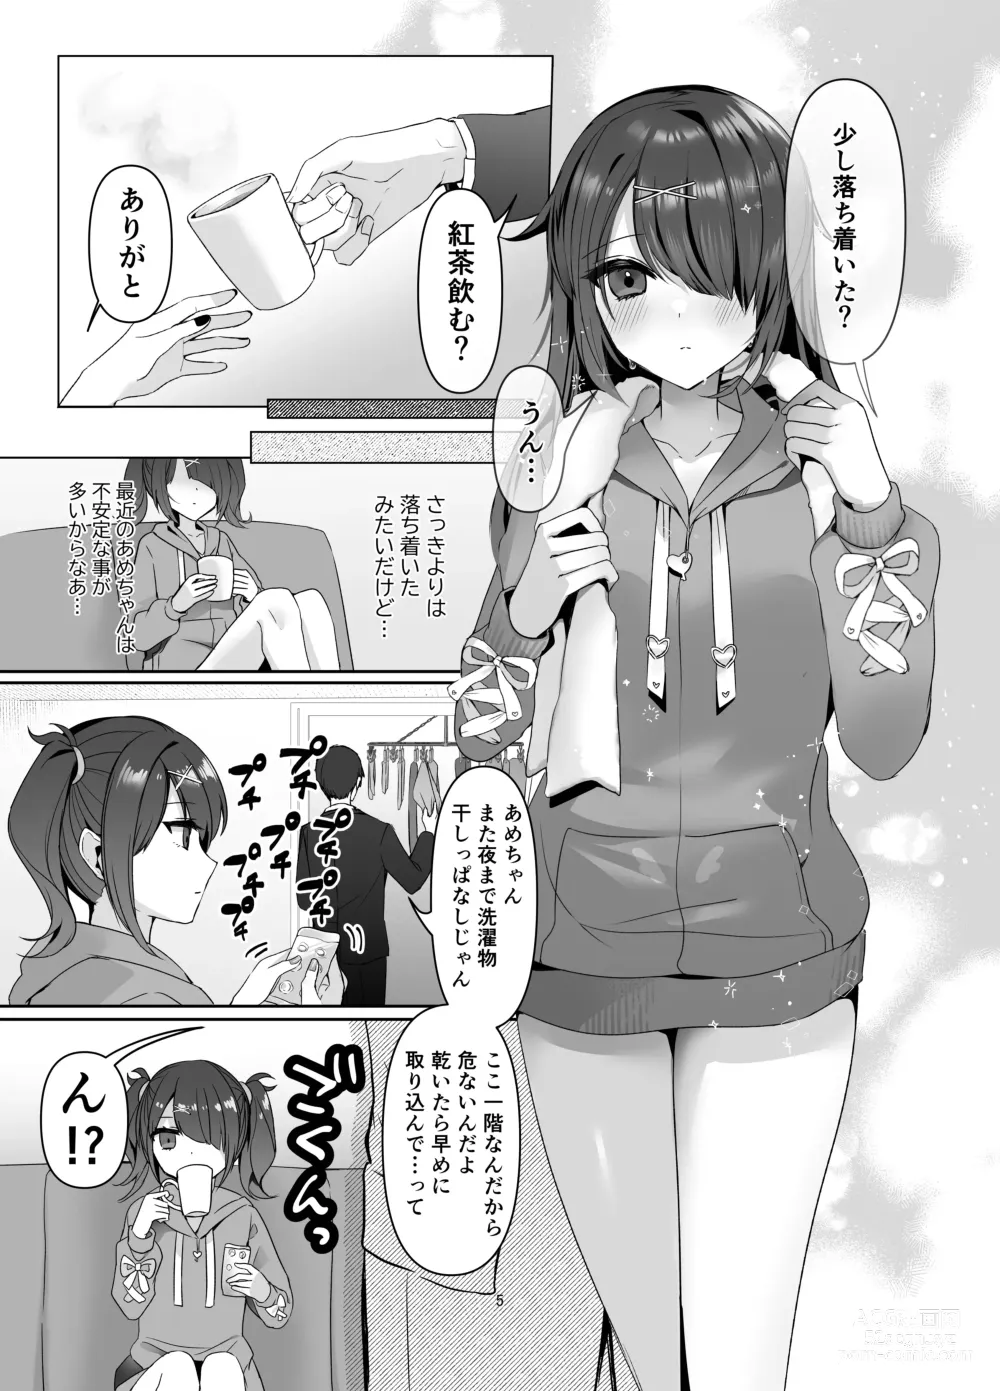 Page 5 of doujinshi Boku wa Ame-chan ni Sakaraenai - I cant resist Ame-chan.